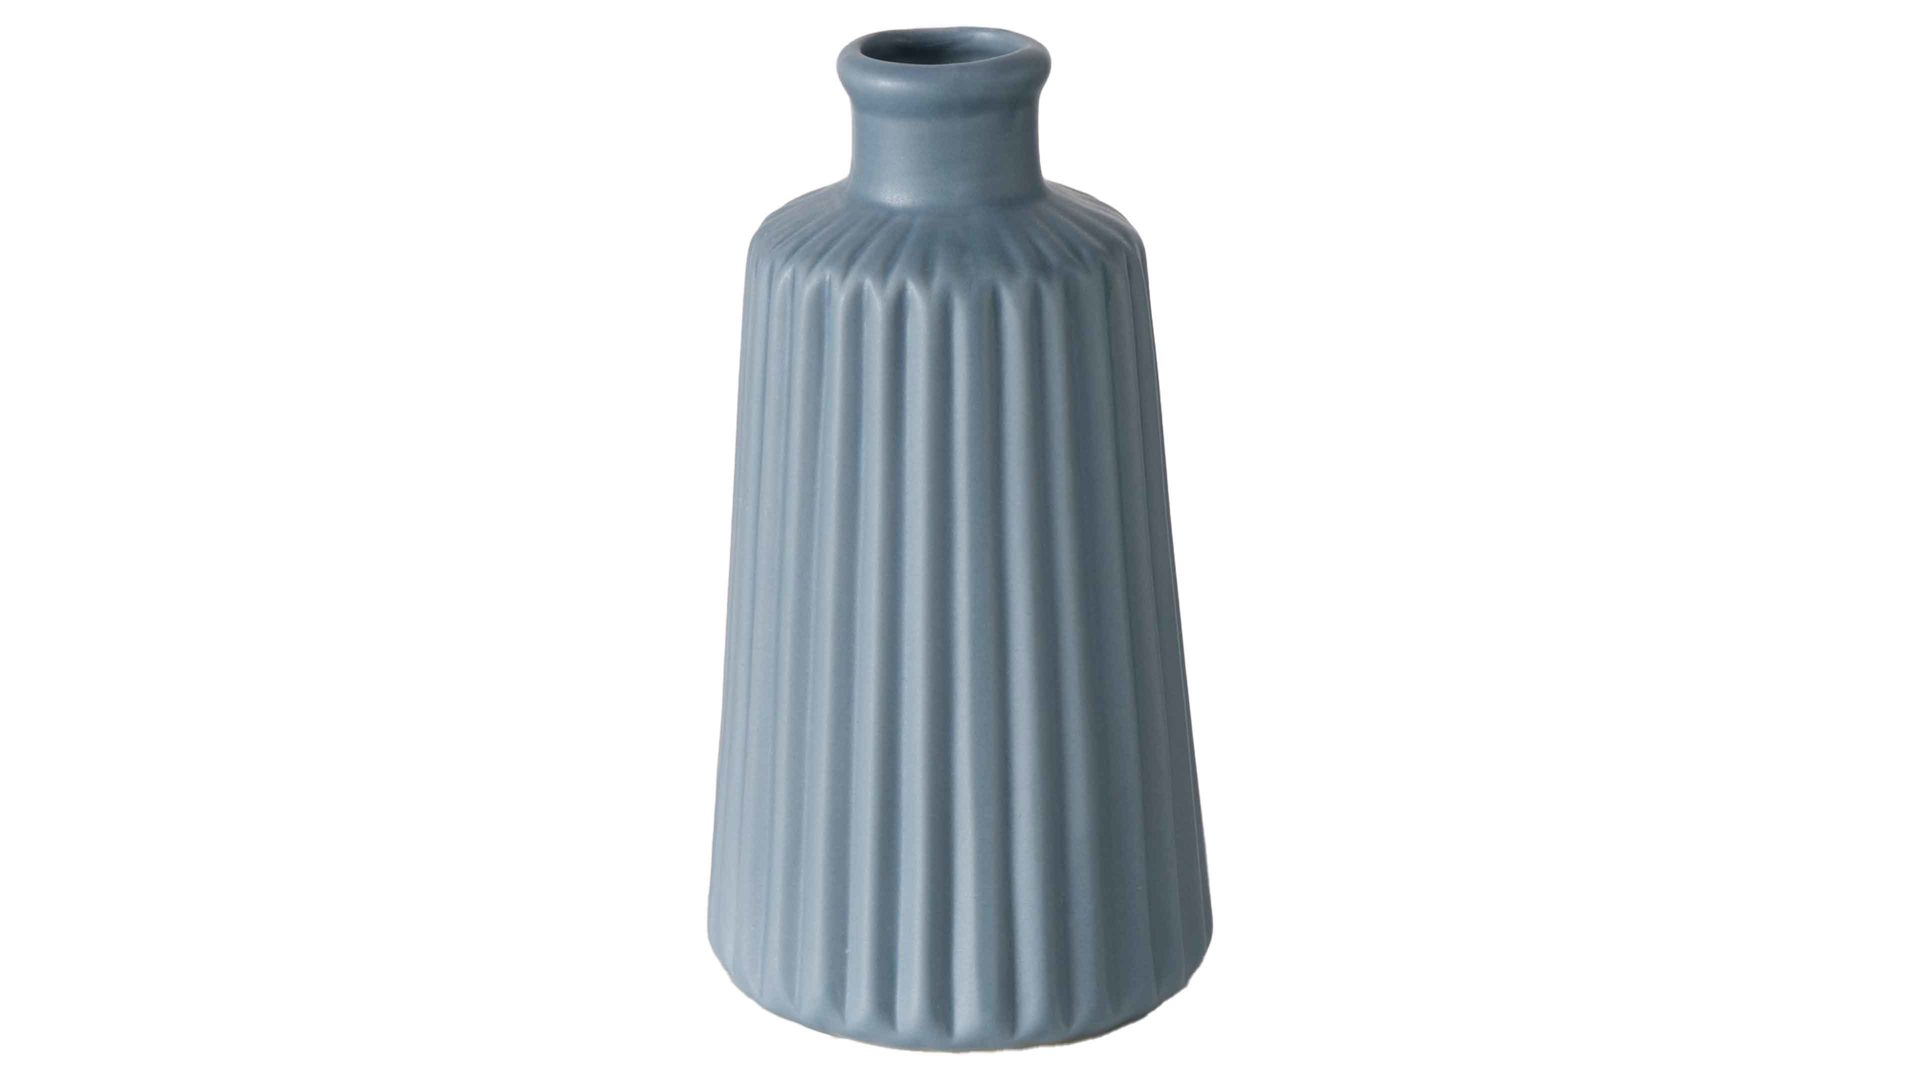 Vase Interliving BEST BUDDYS! aus Keramik in Blau Interliving BEST BUDDYS! Vase Esko mattblaues Porzellan - Höhe ca. 18 cm